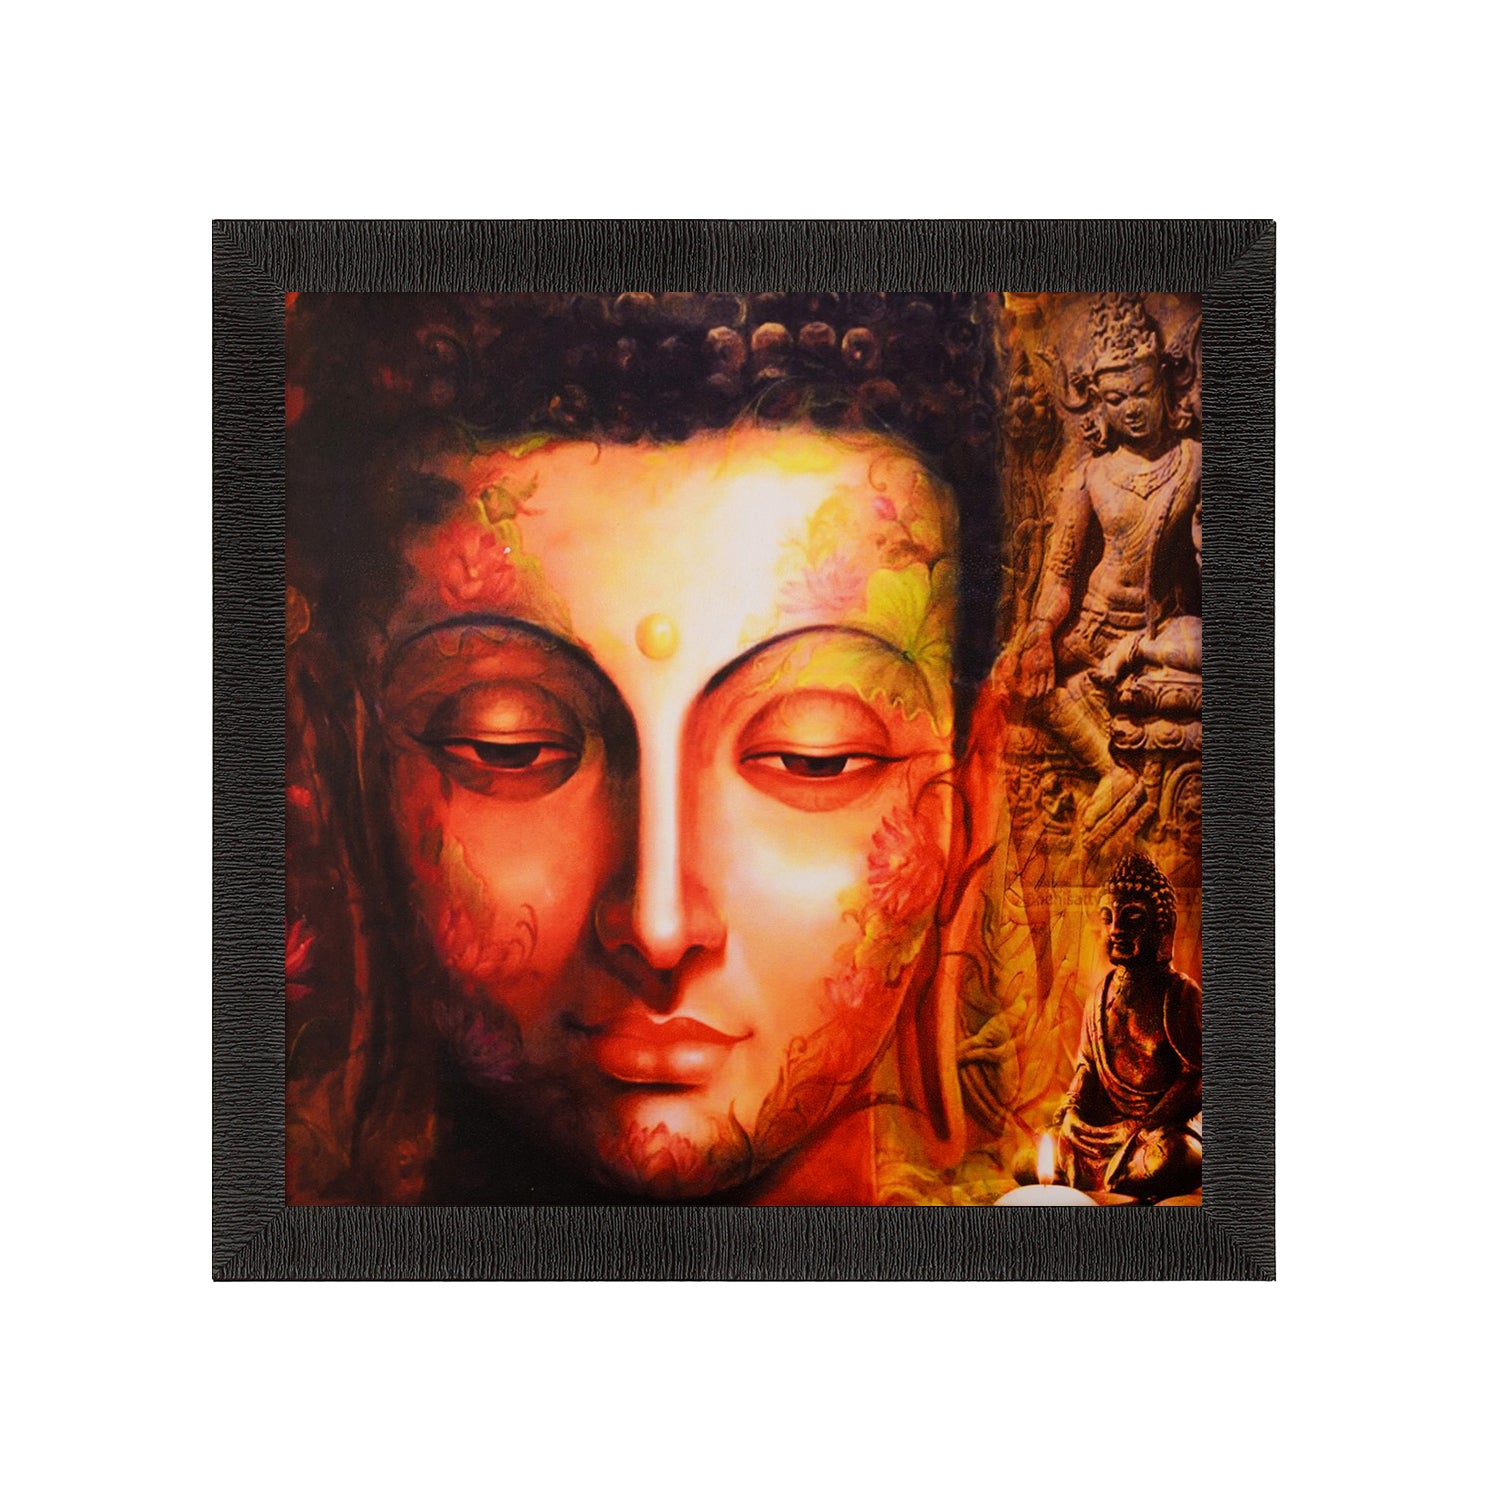 Peaceful Buddha Painting Digital Printed Religious Wall Art